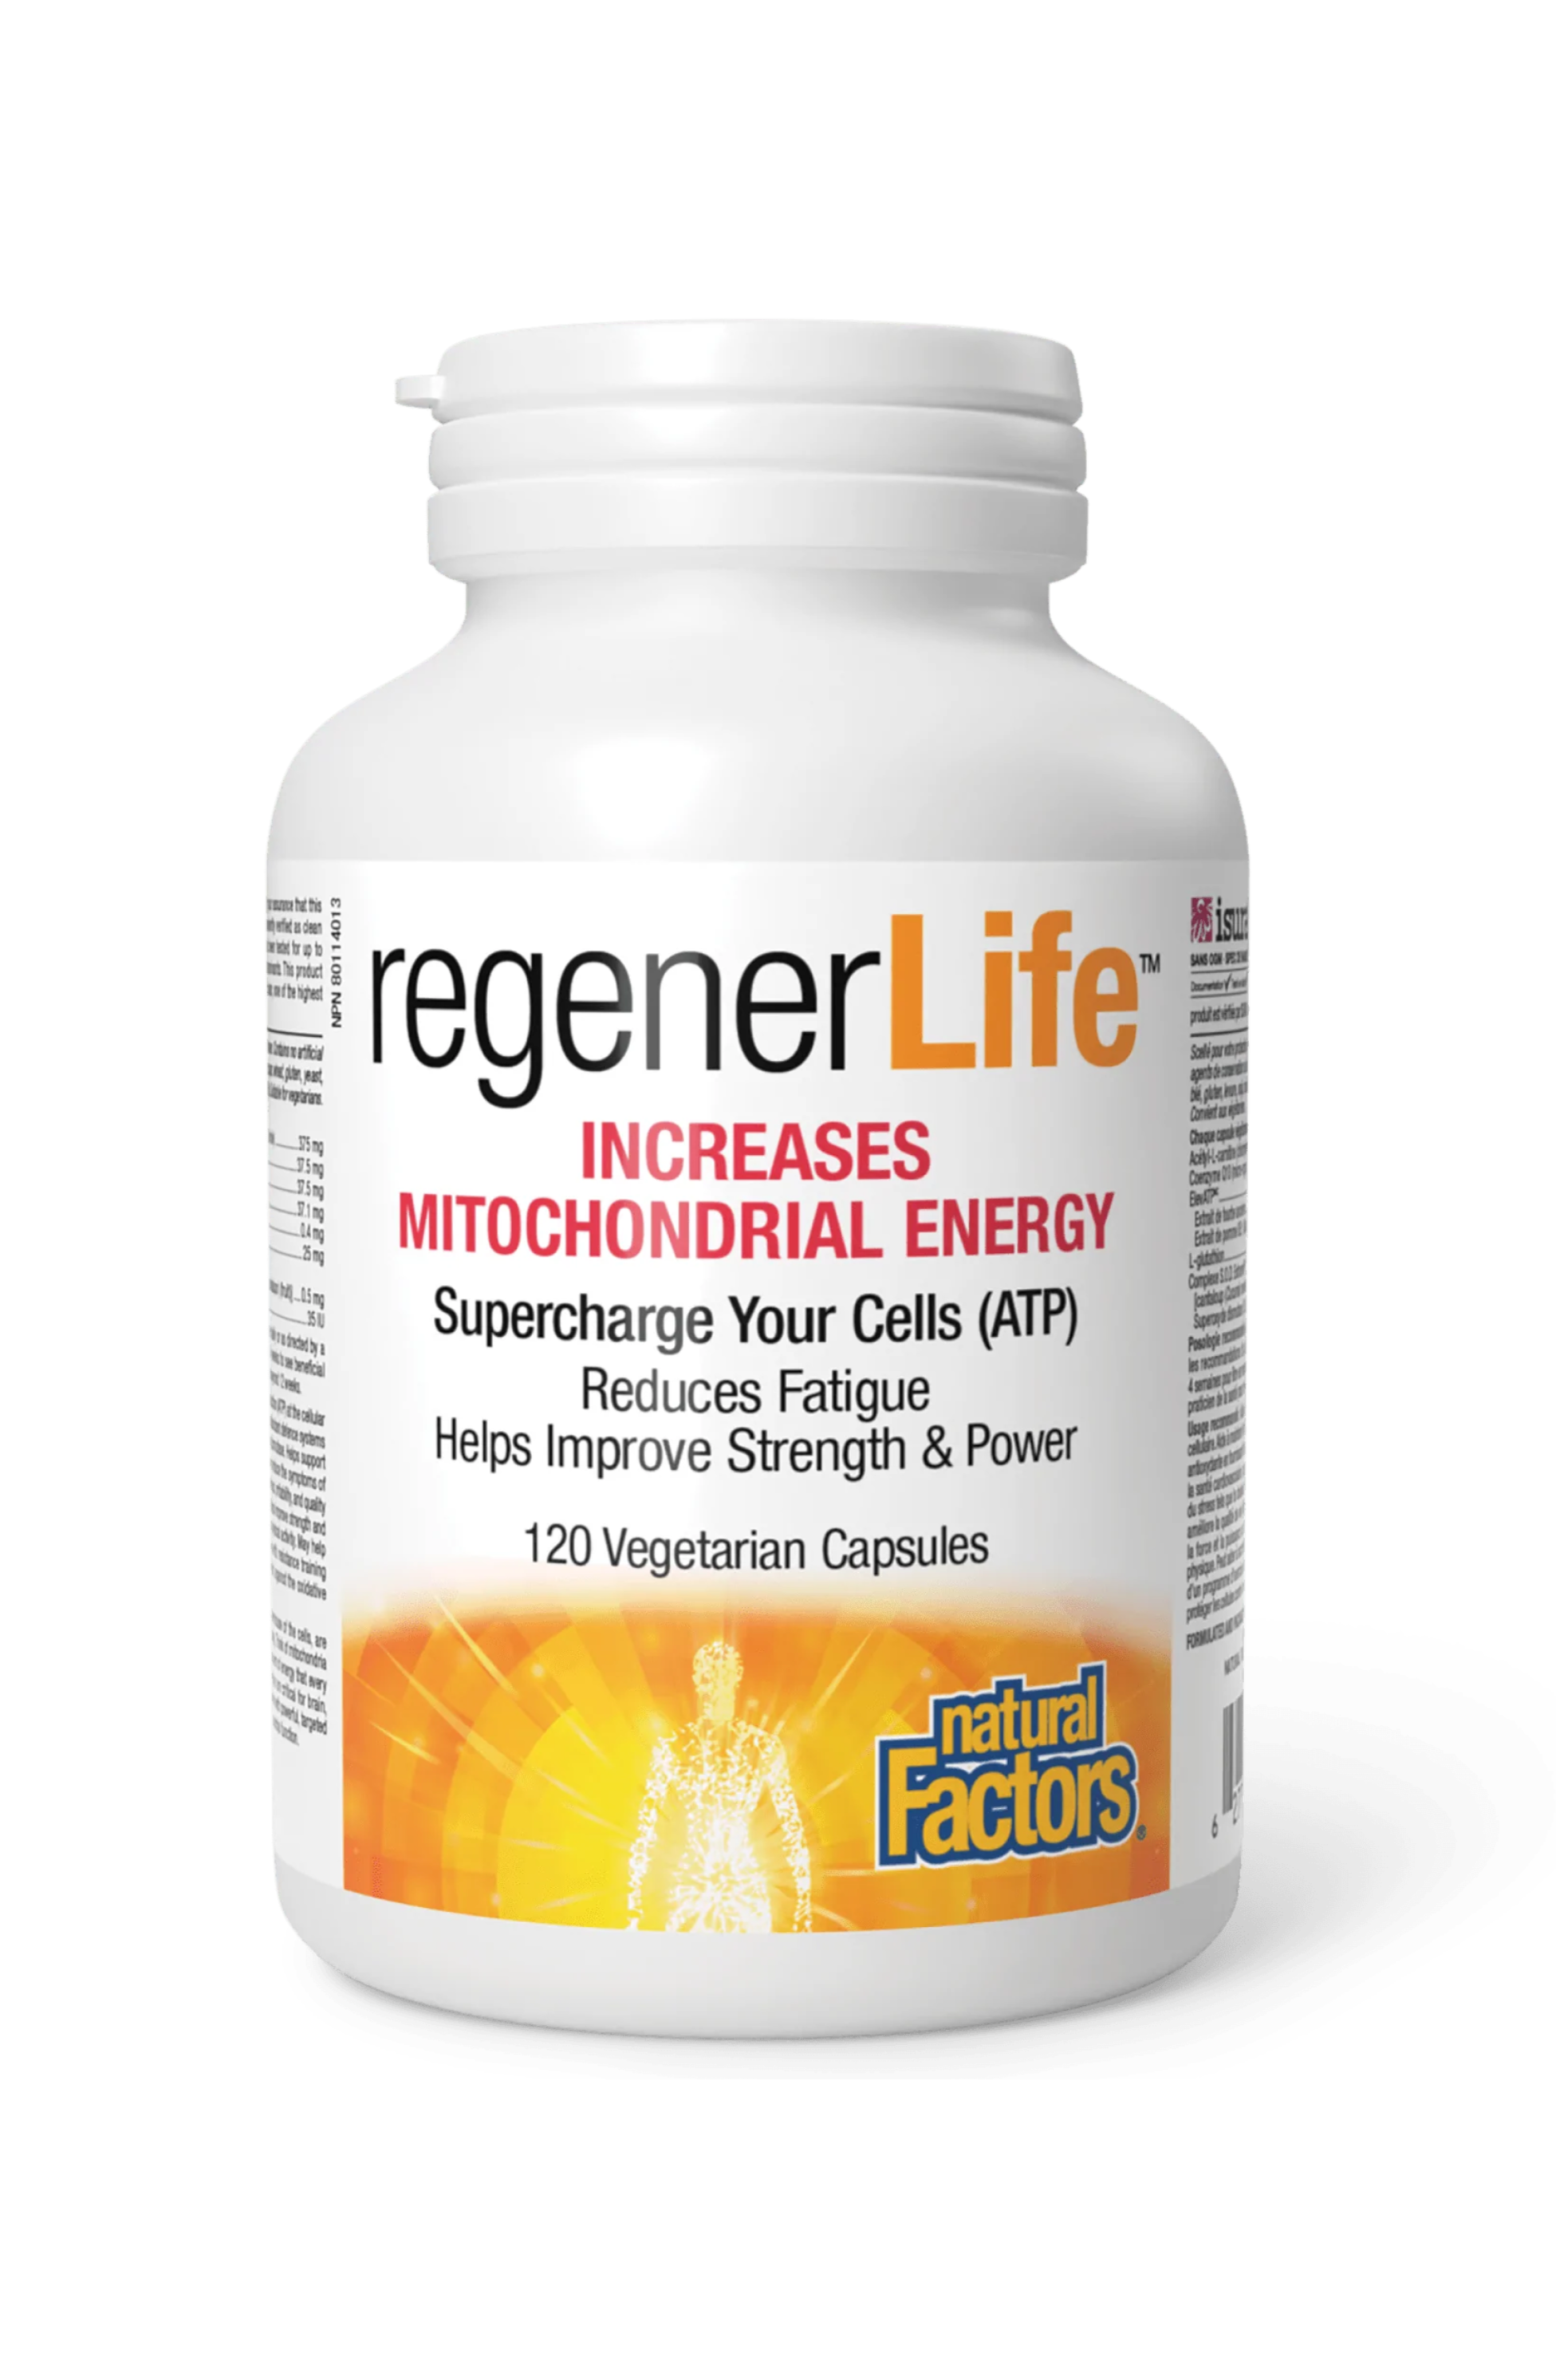 Natural Factors regenerLife Mitochondrial Energy 120s